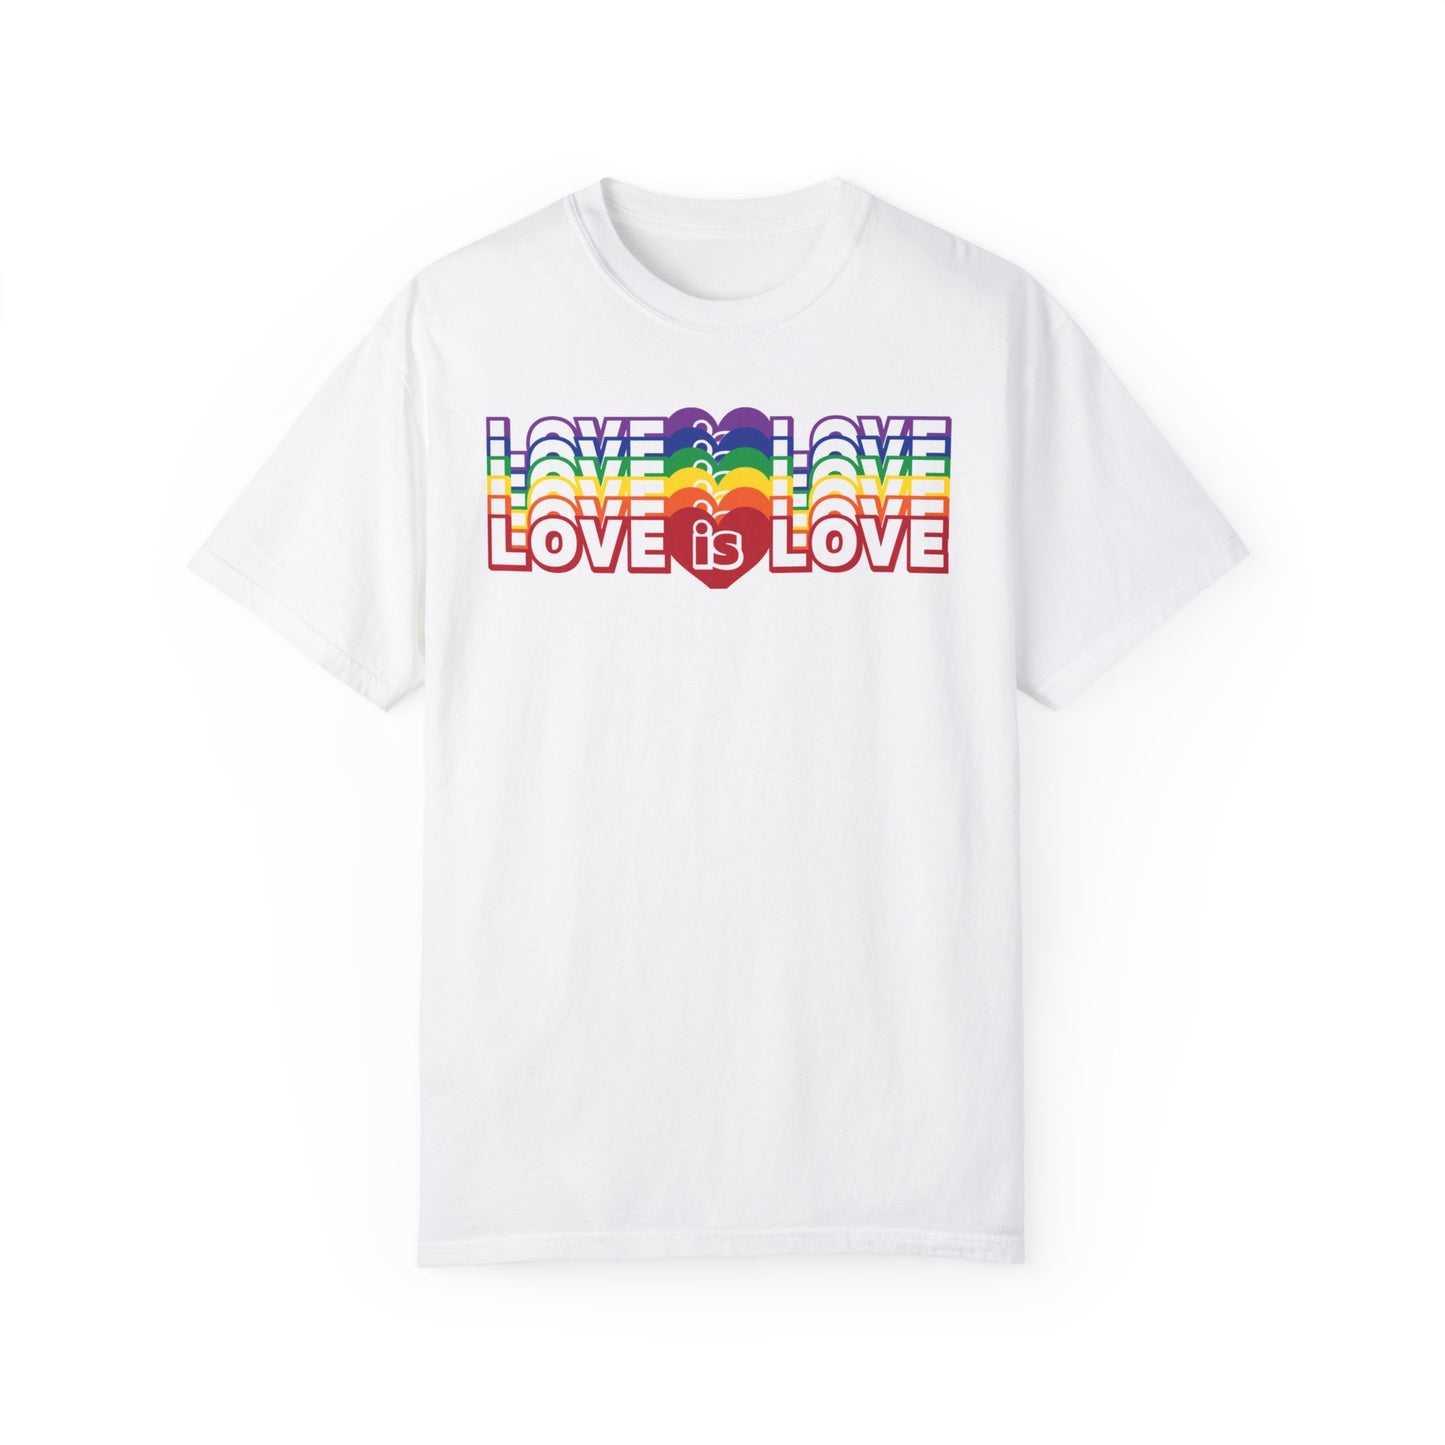 Love is love T-shirt